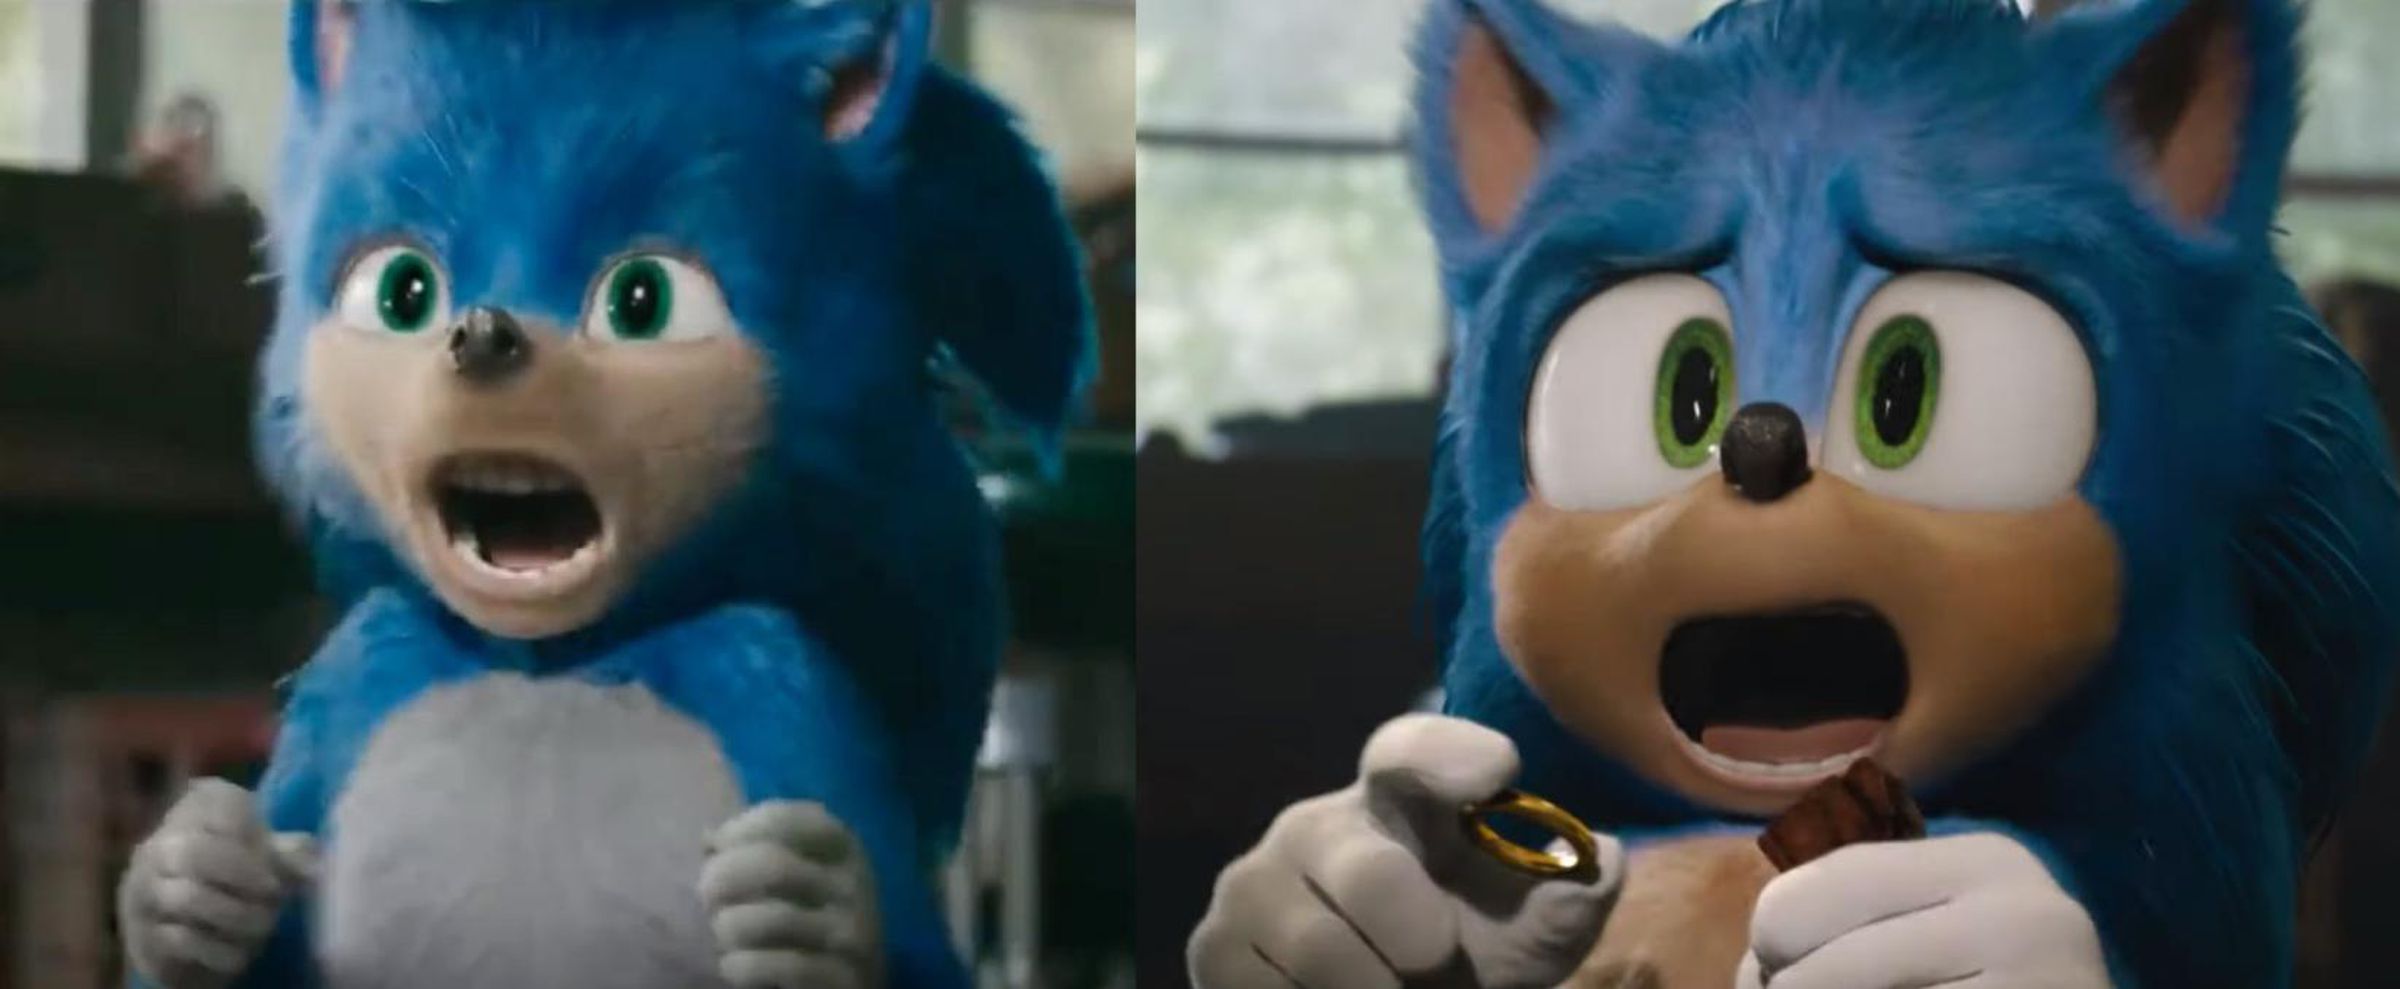 Old Sonic vs. new Sonic